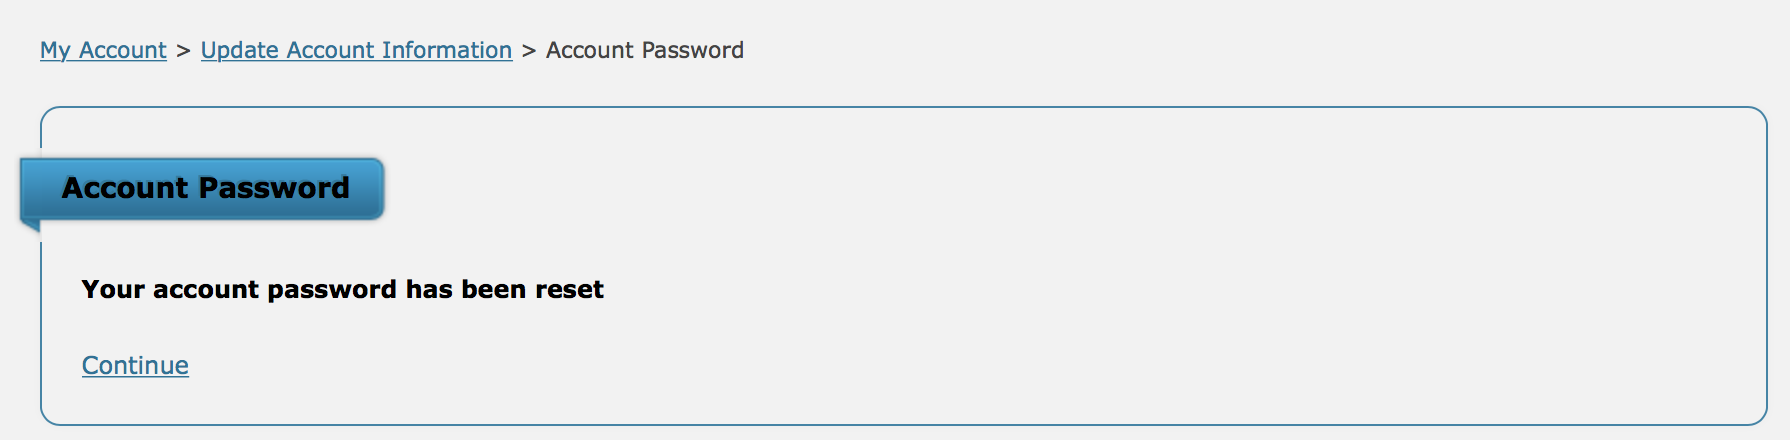 AMP Password reset successful message displayed.